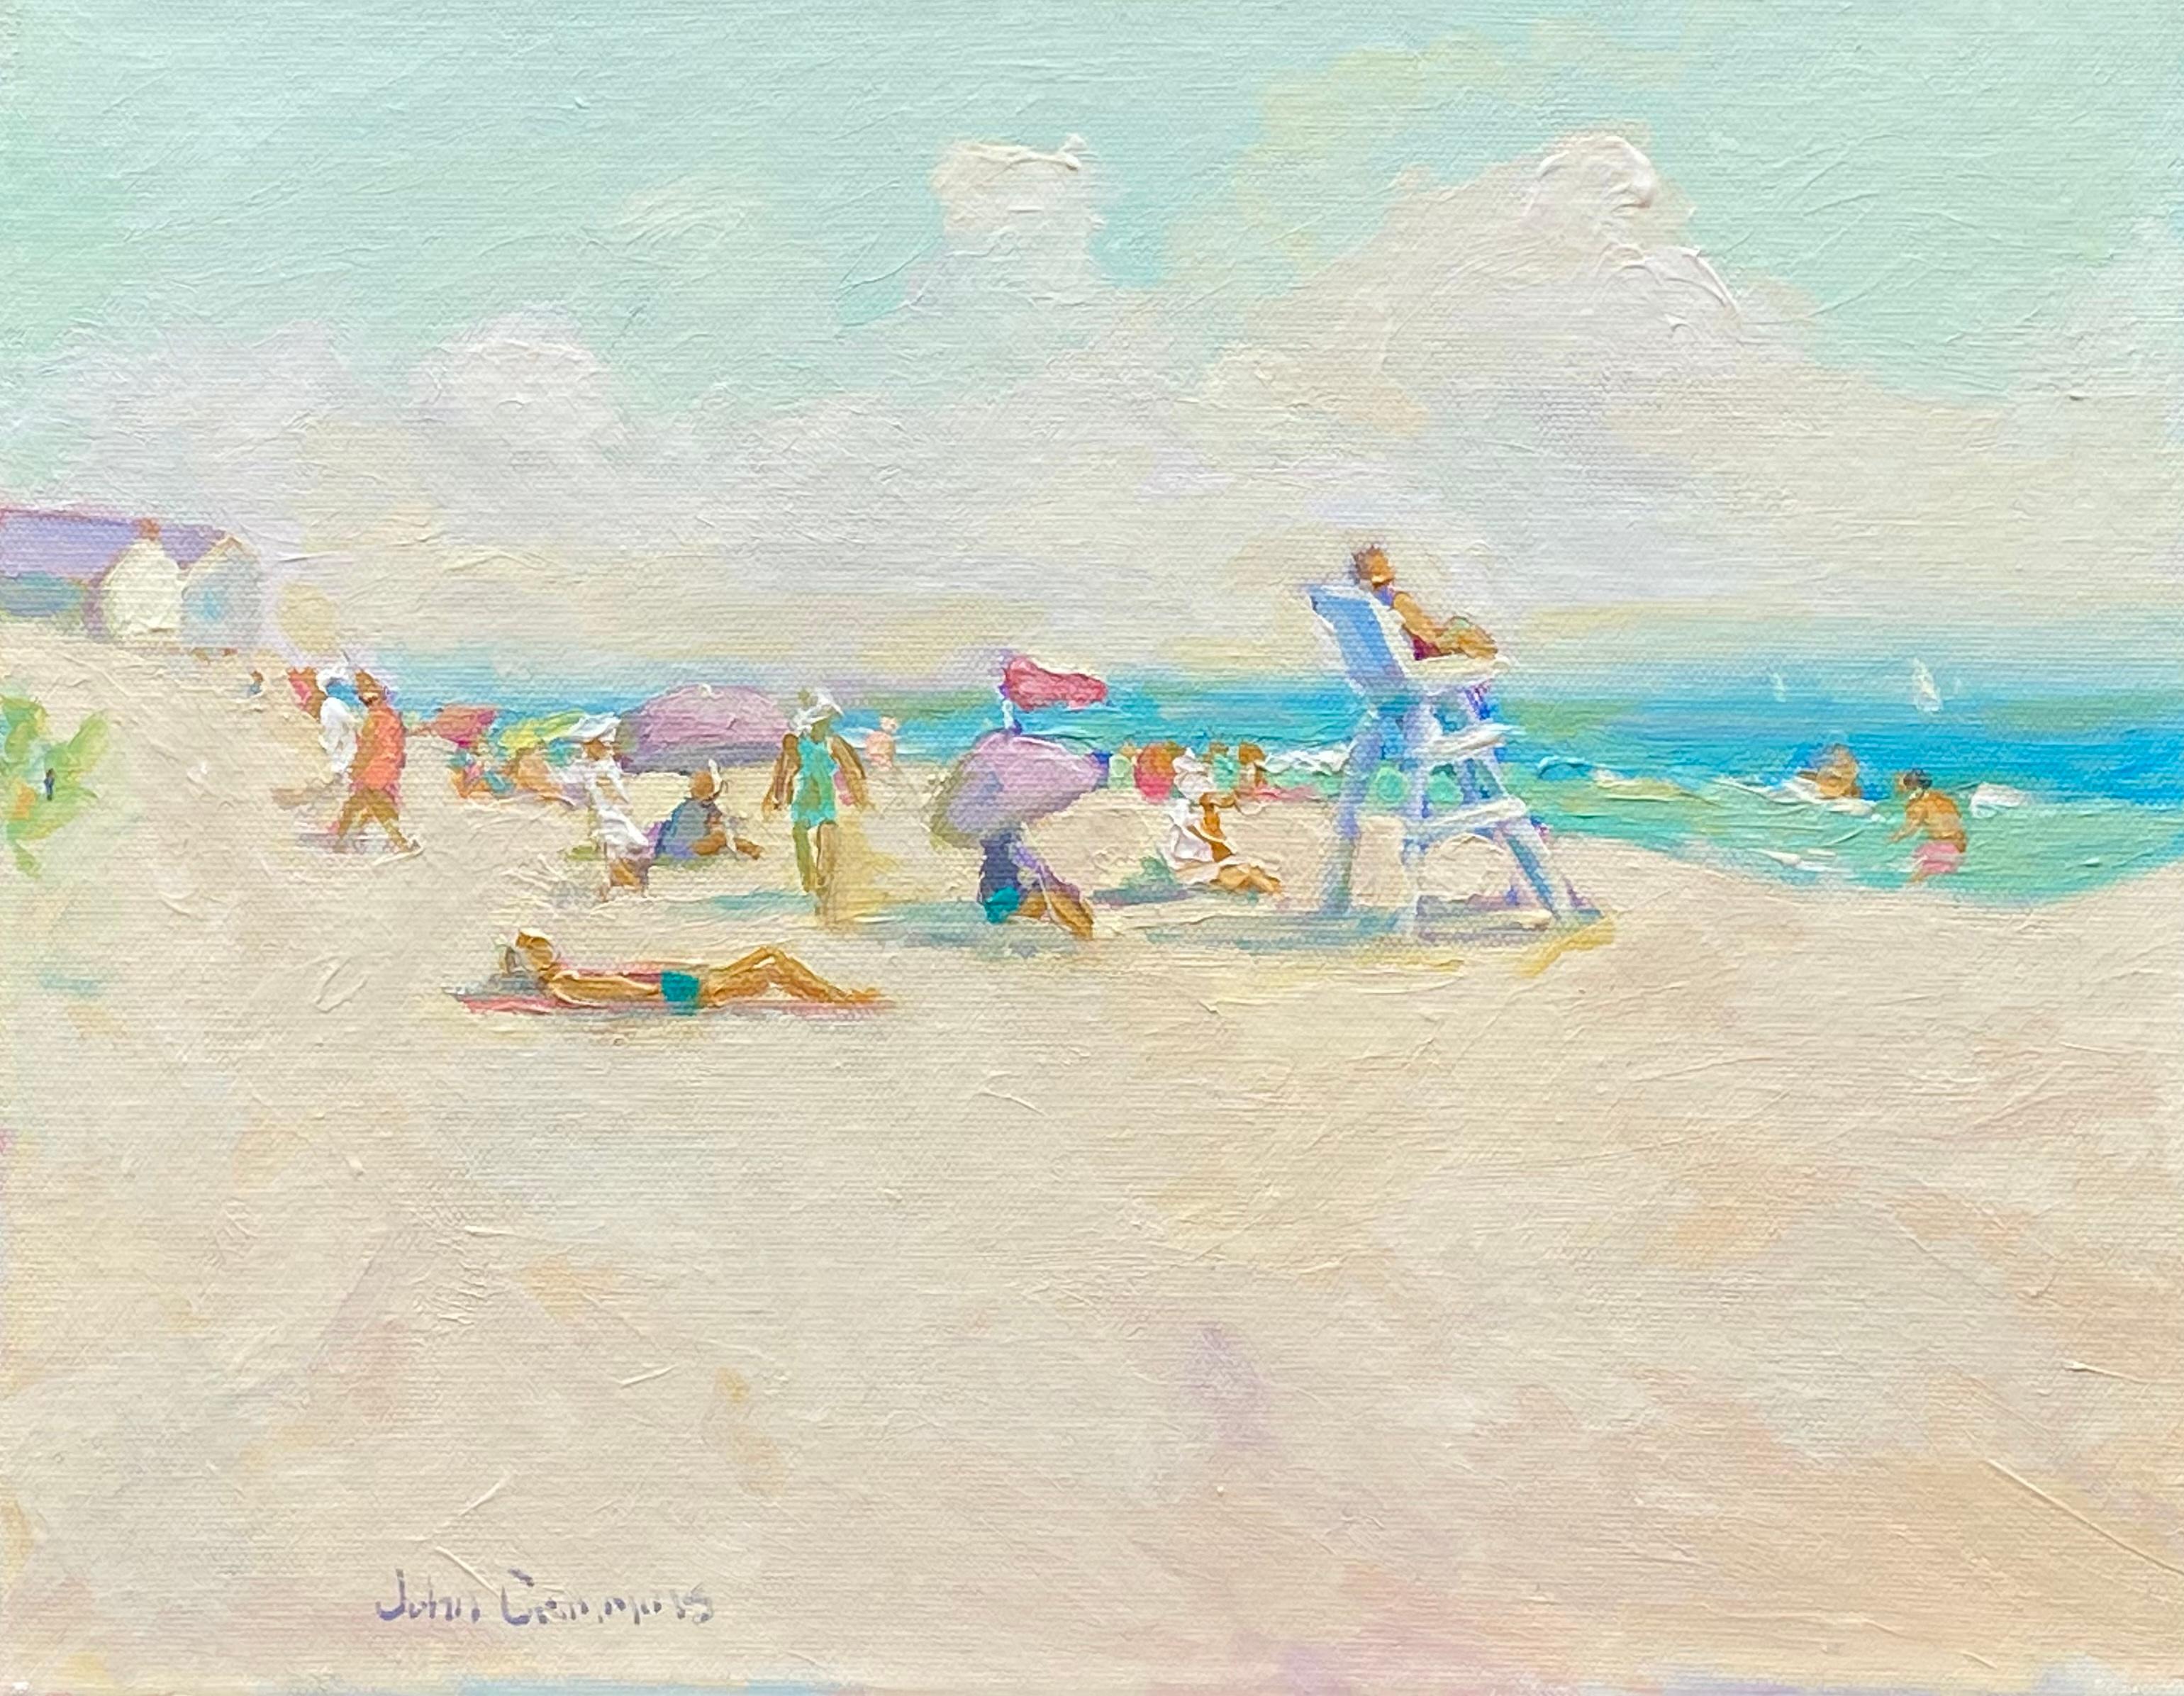 John Crimmins Figurative Painting - “Cooper’s Beach, Southampton”